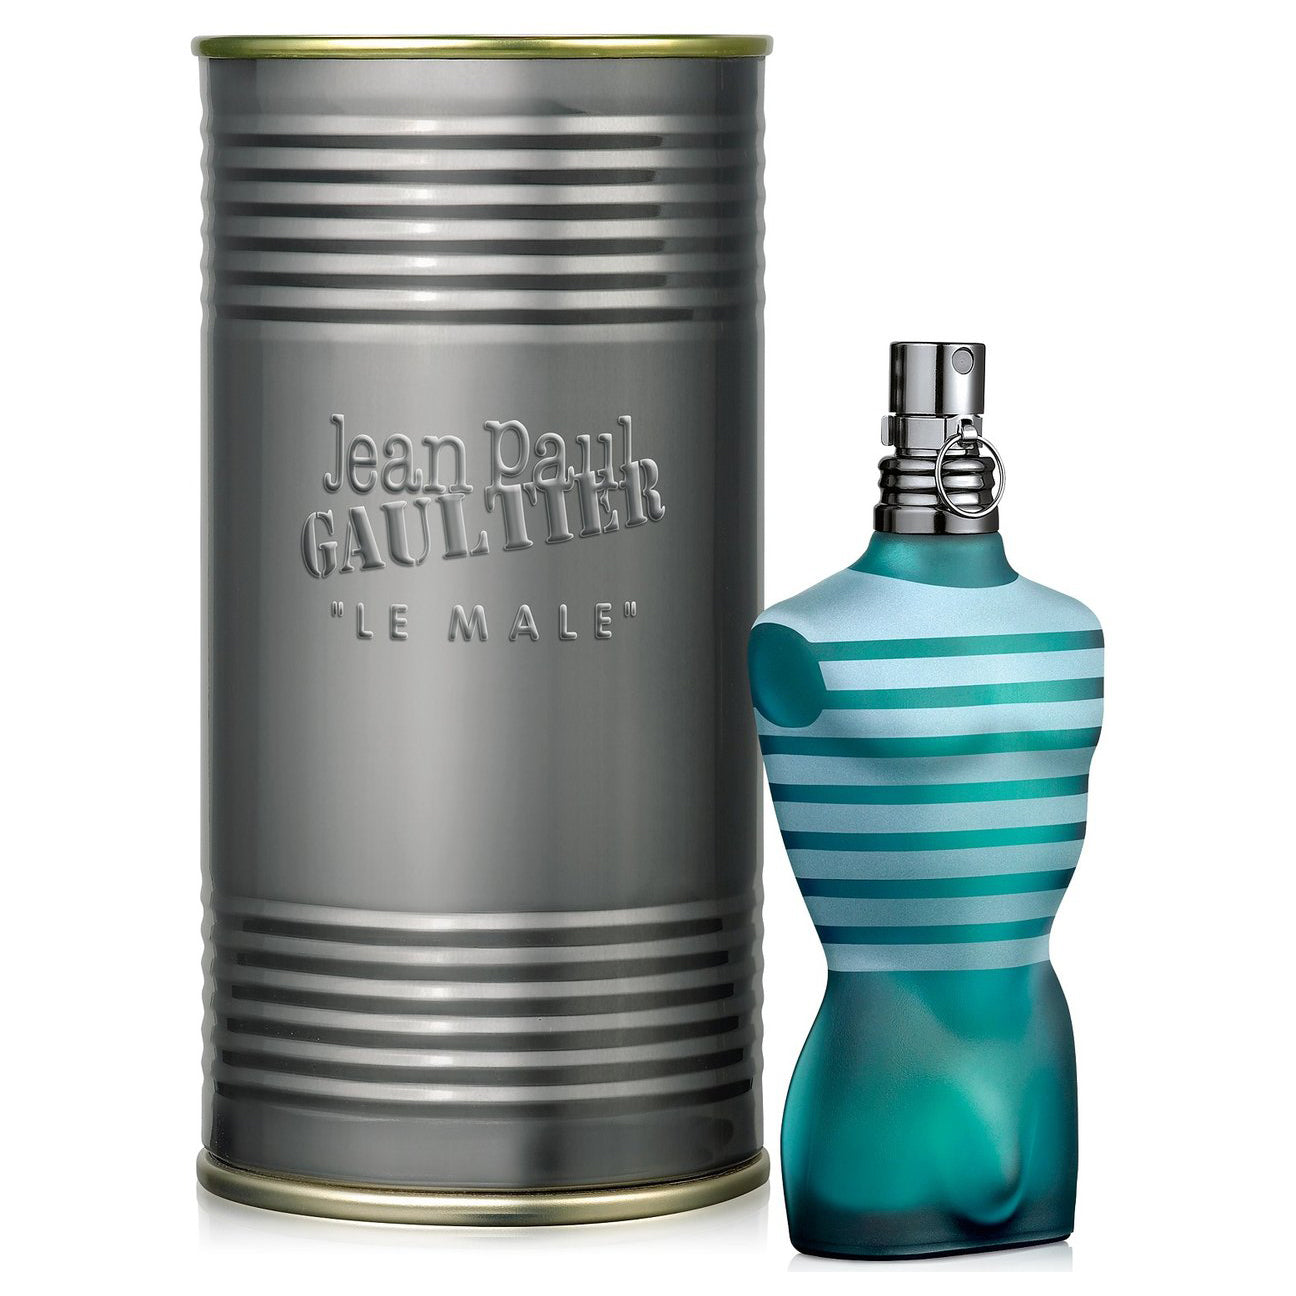 Jean Paul Gaultier Men's "LE MALE" Eau de Toilette Spray 4.2 oz 125 ml